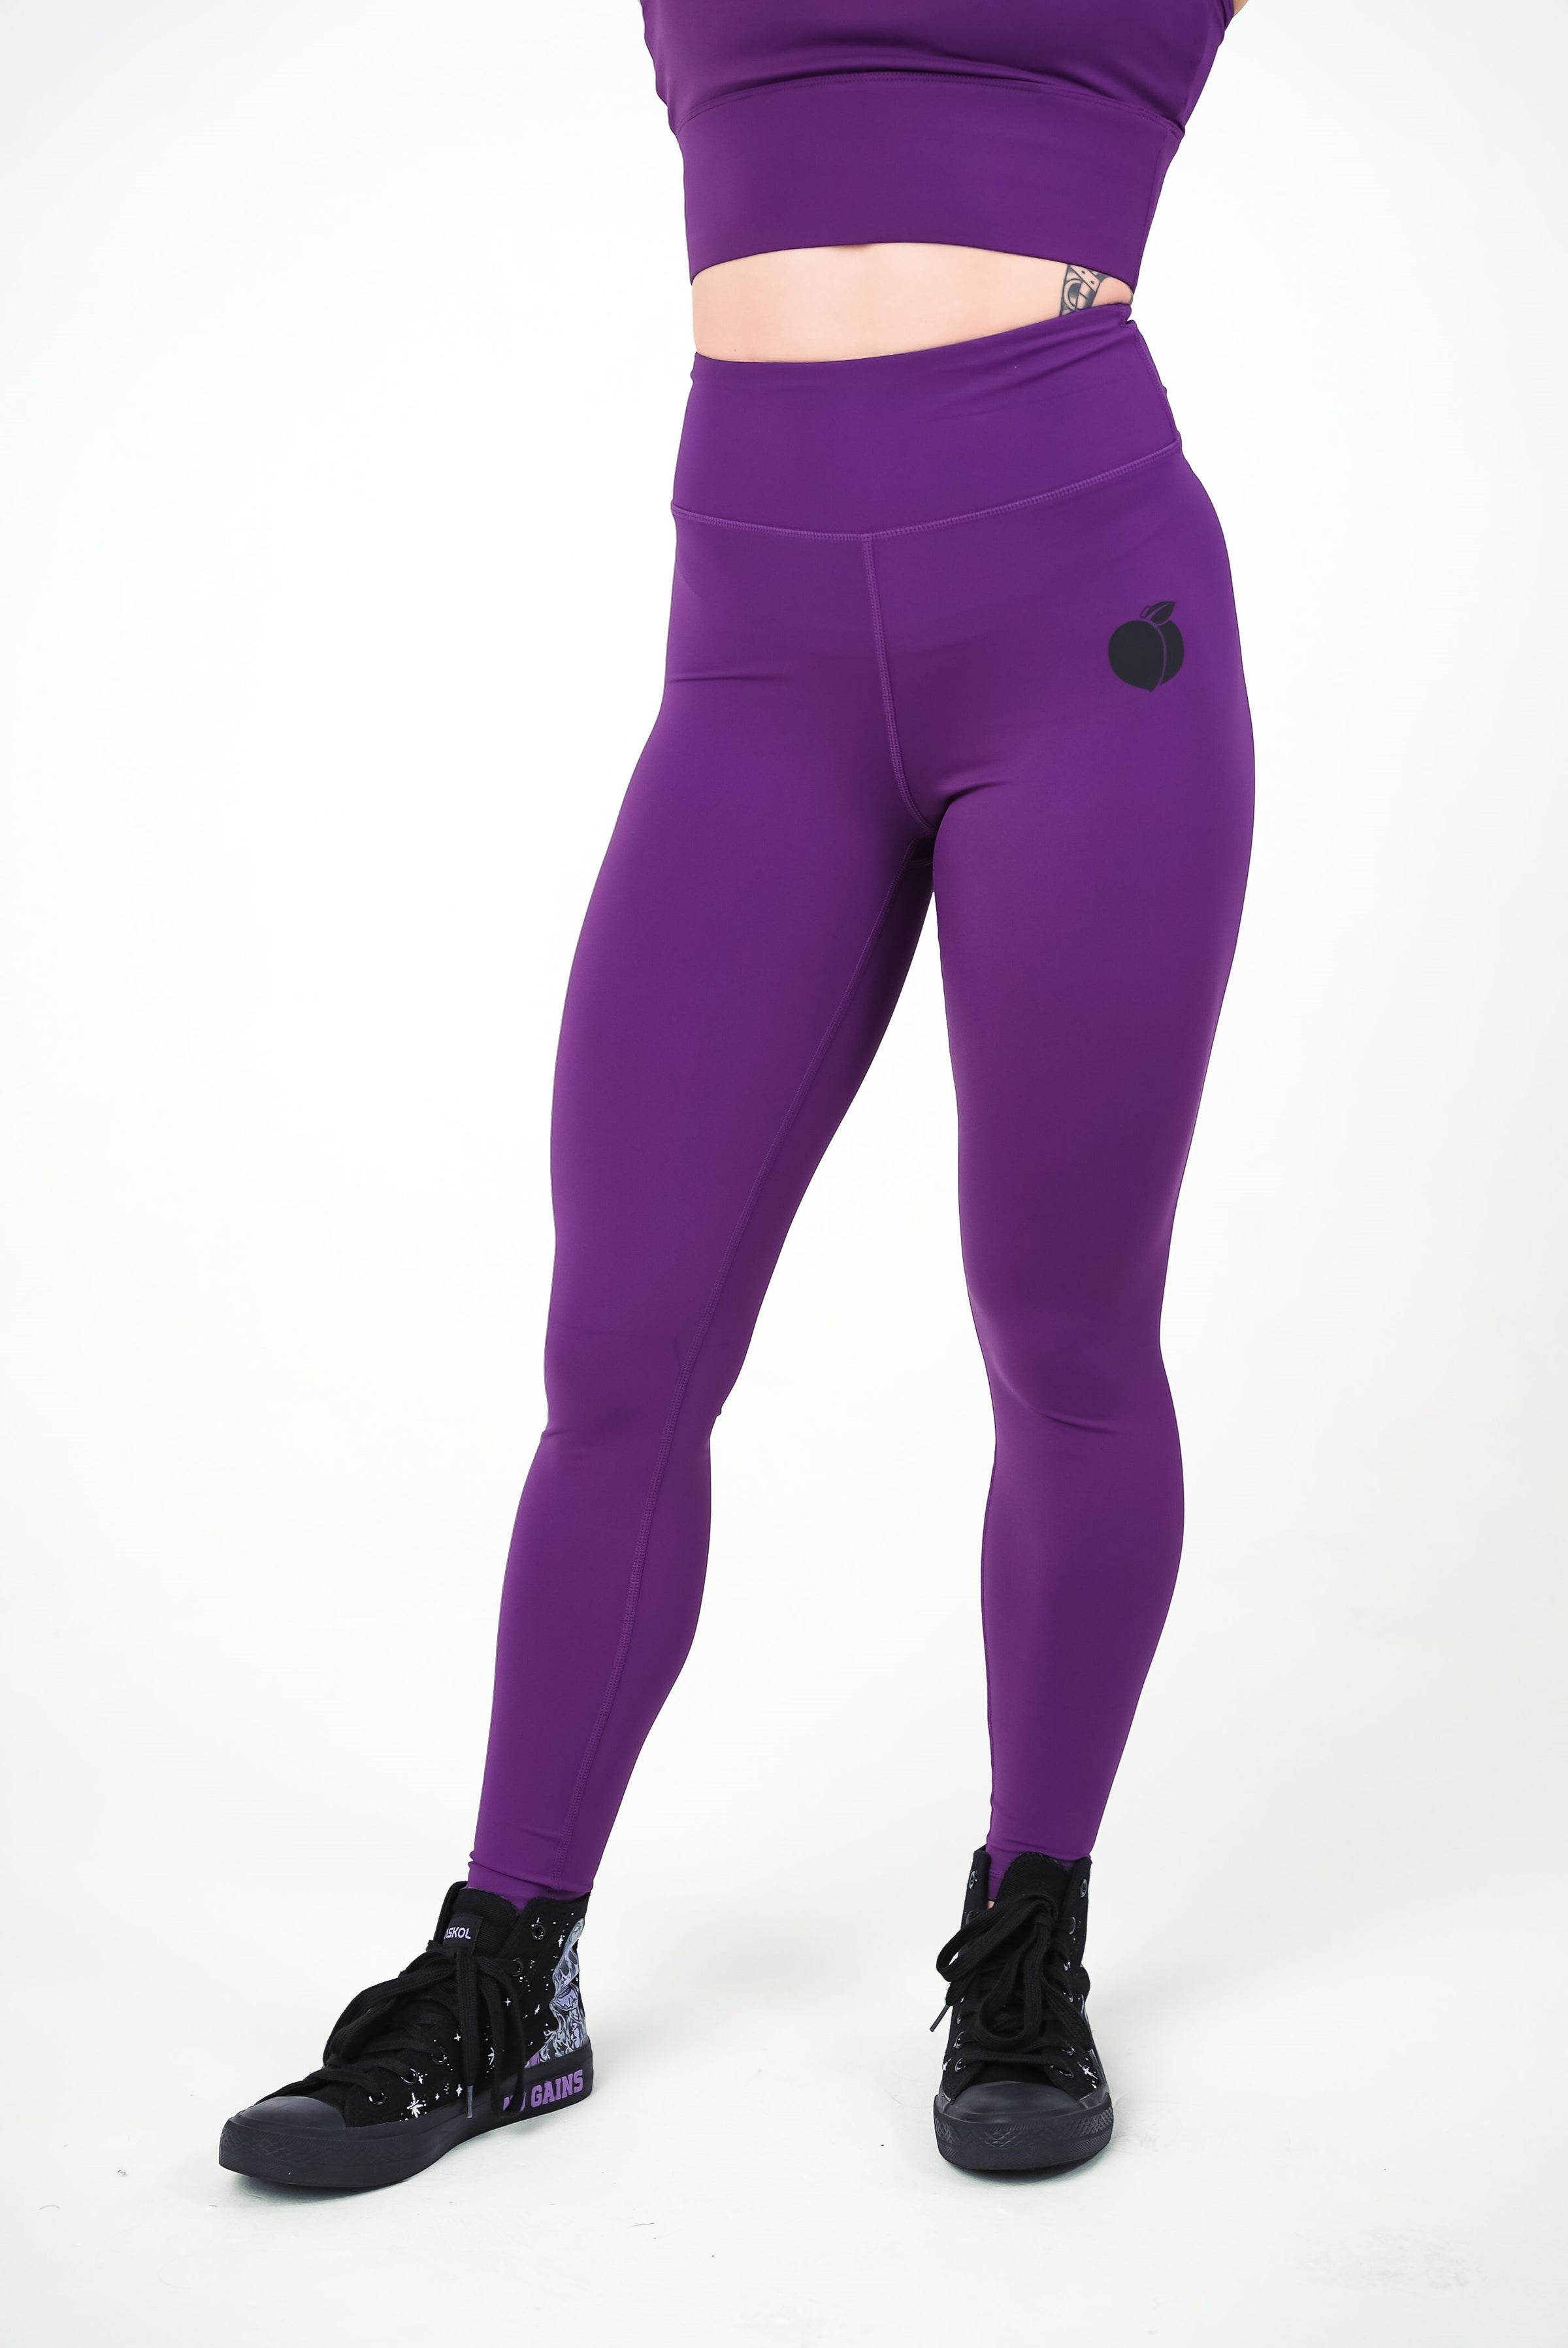 Scarf Black Purple Leggings Seamless Workout Leggings Women Lady